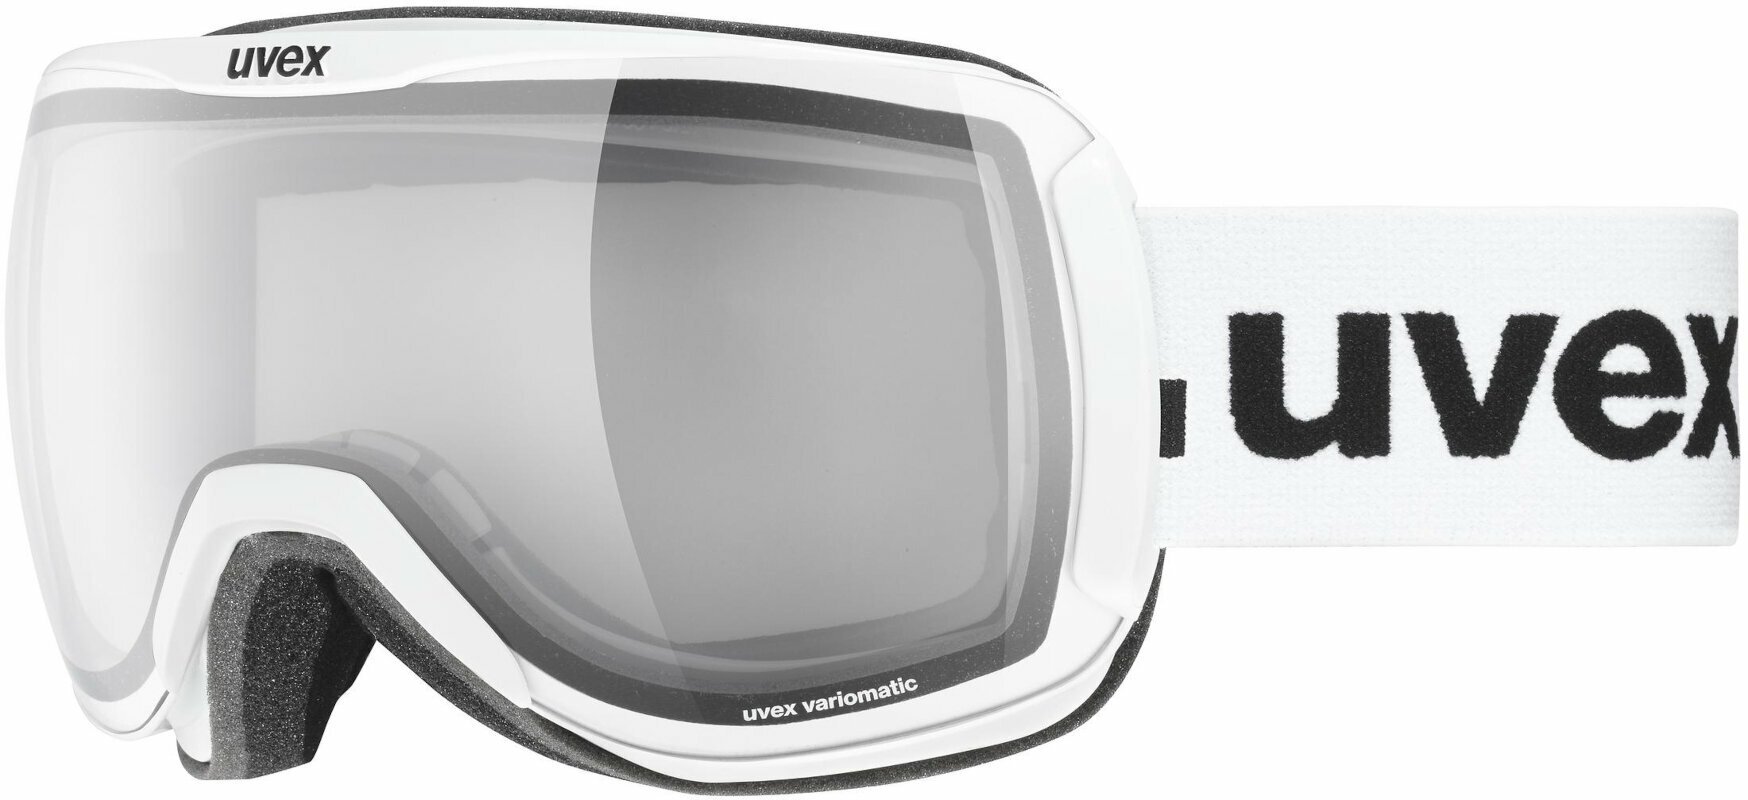 Goggles Σκι UVEX Downhill 2100 VPX White/Variomatic Polavision Goggles Σκι